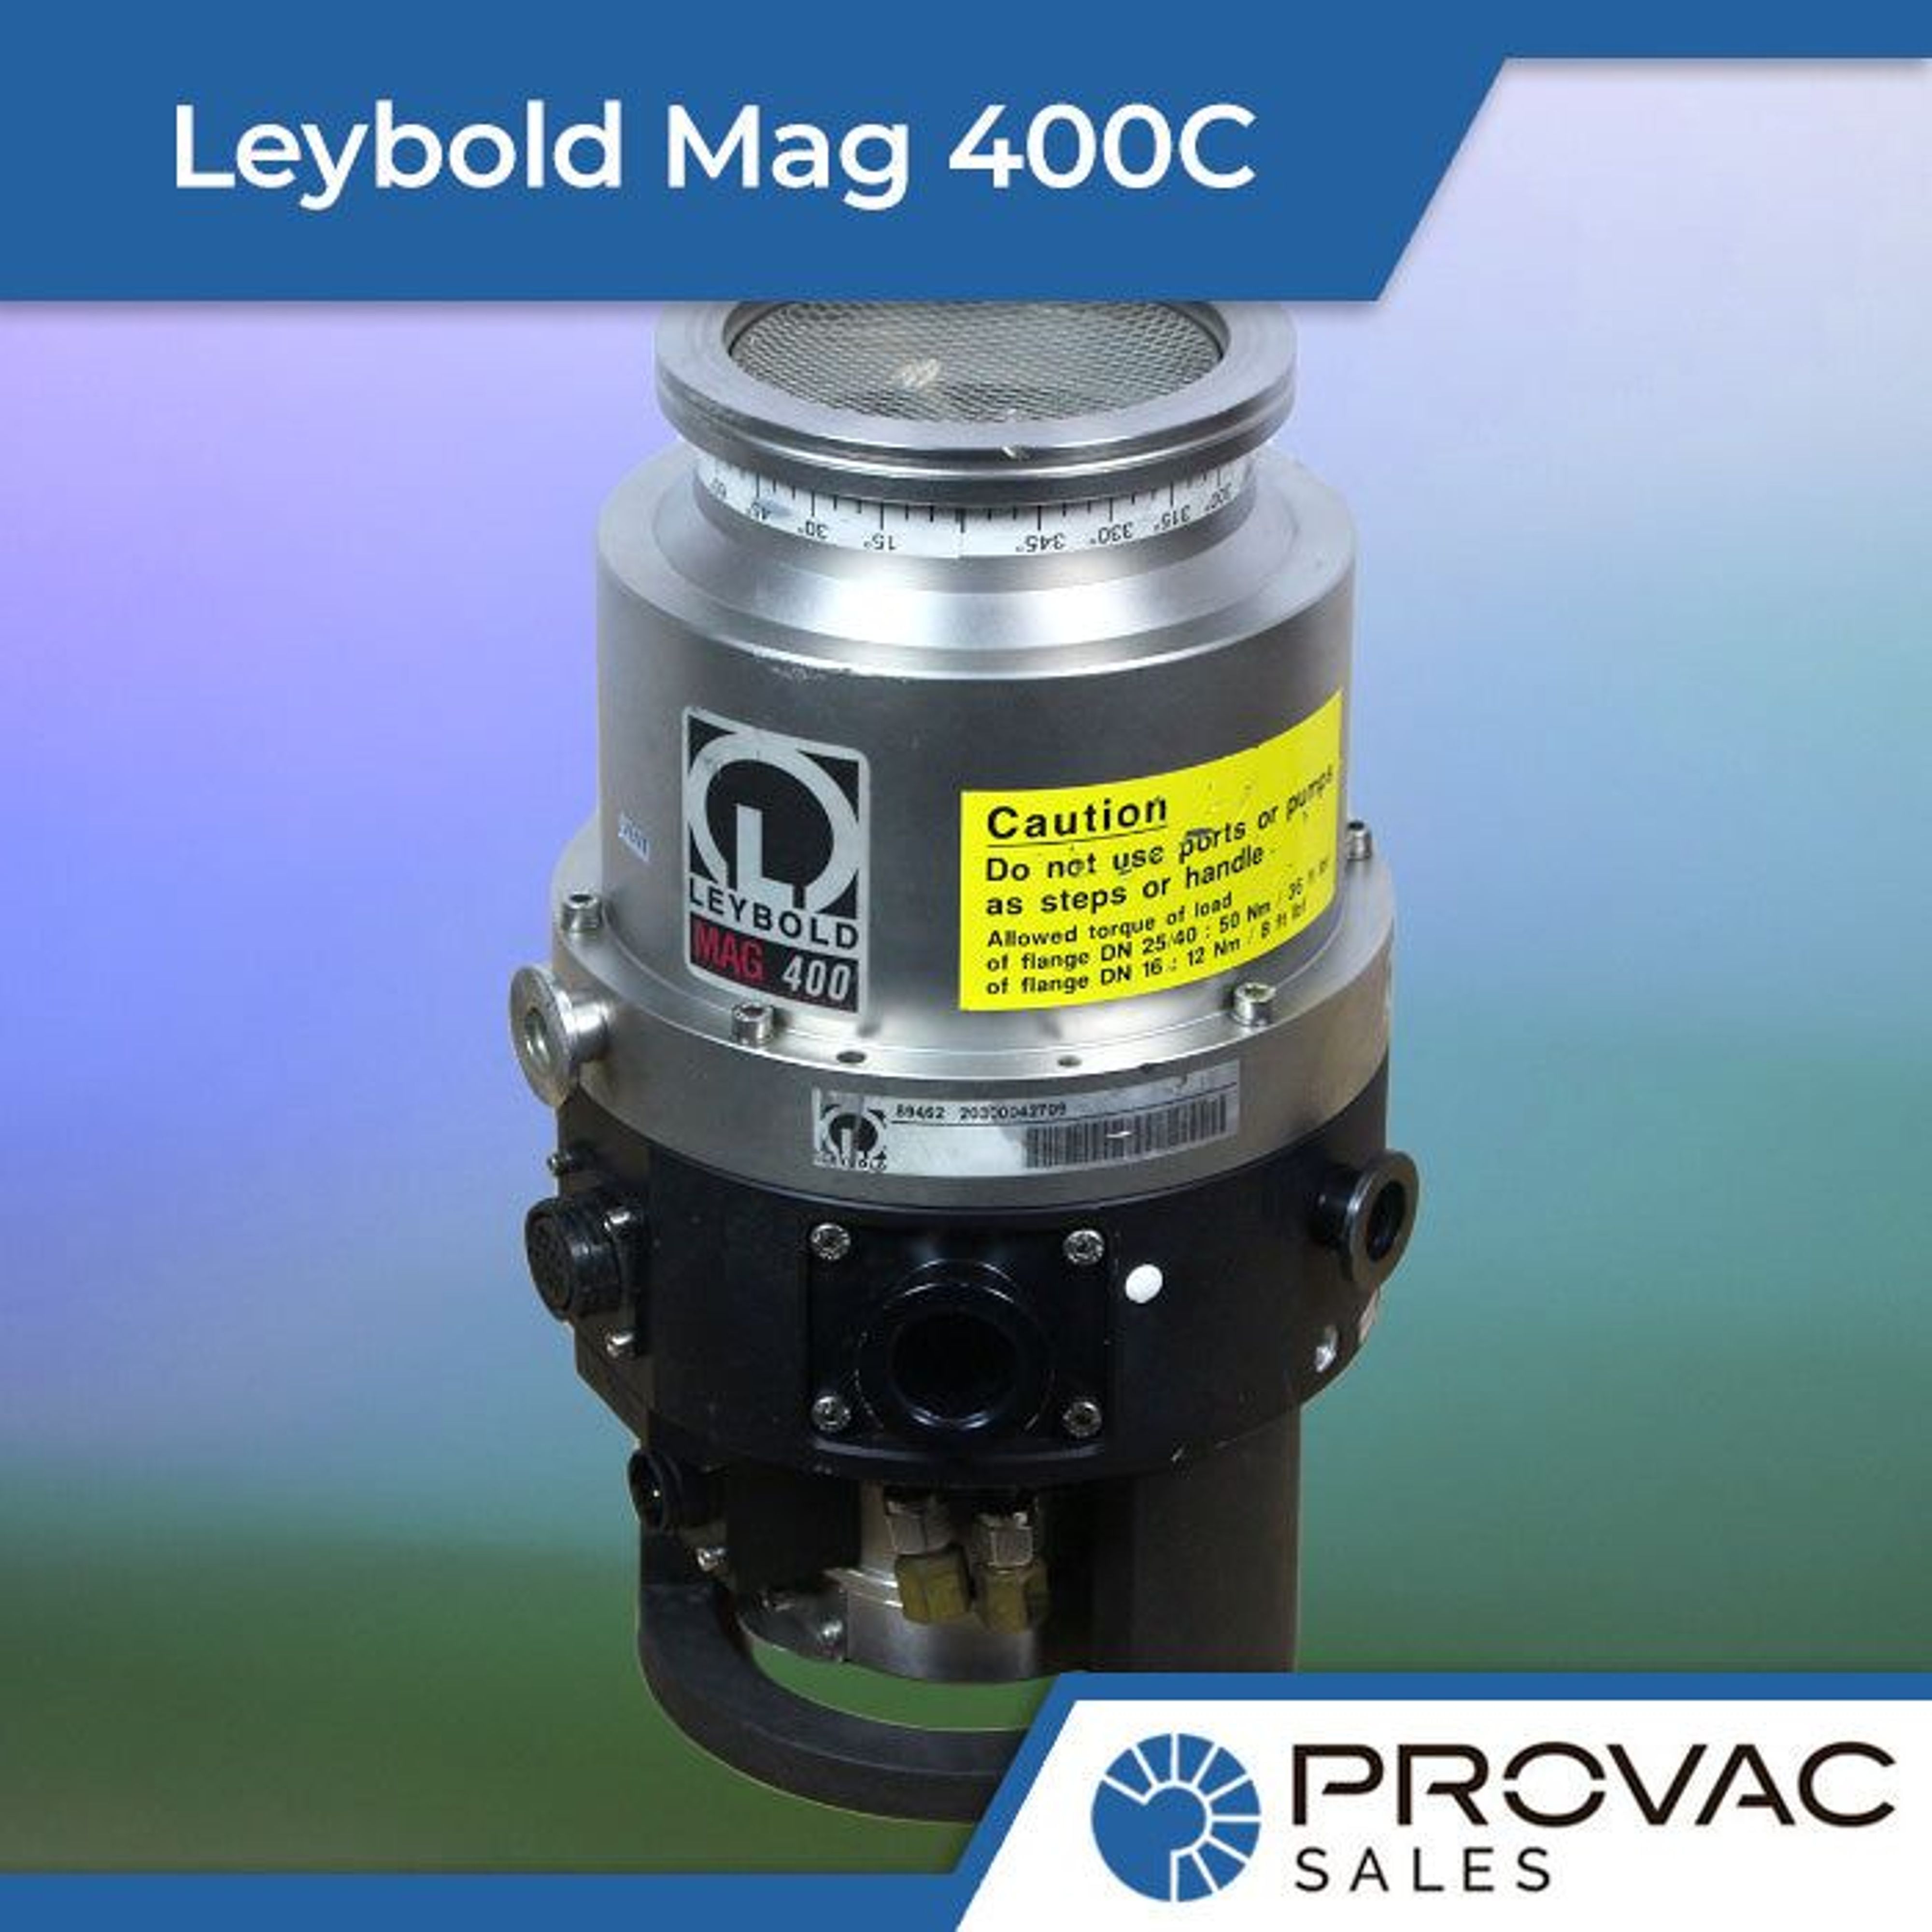 Leybold Mag 400C Turbomolecular Pump Background